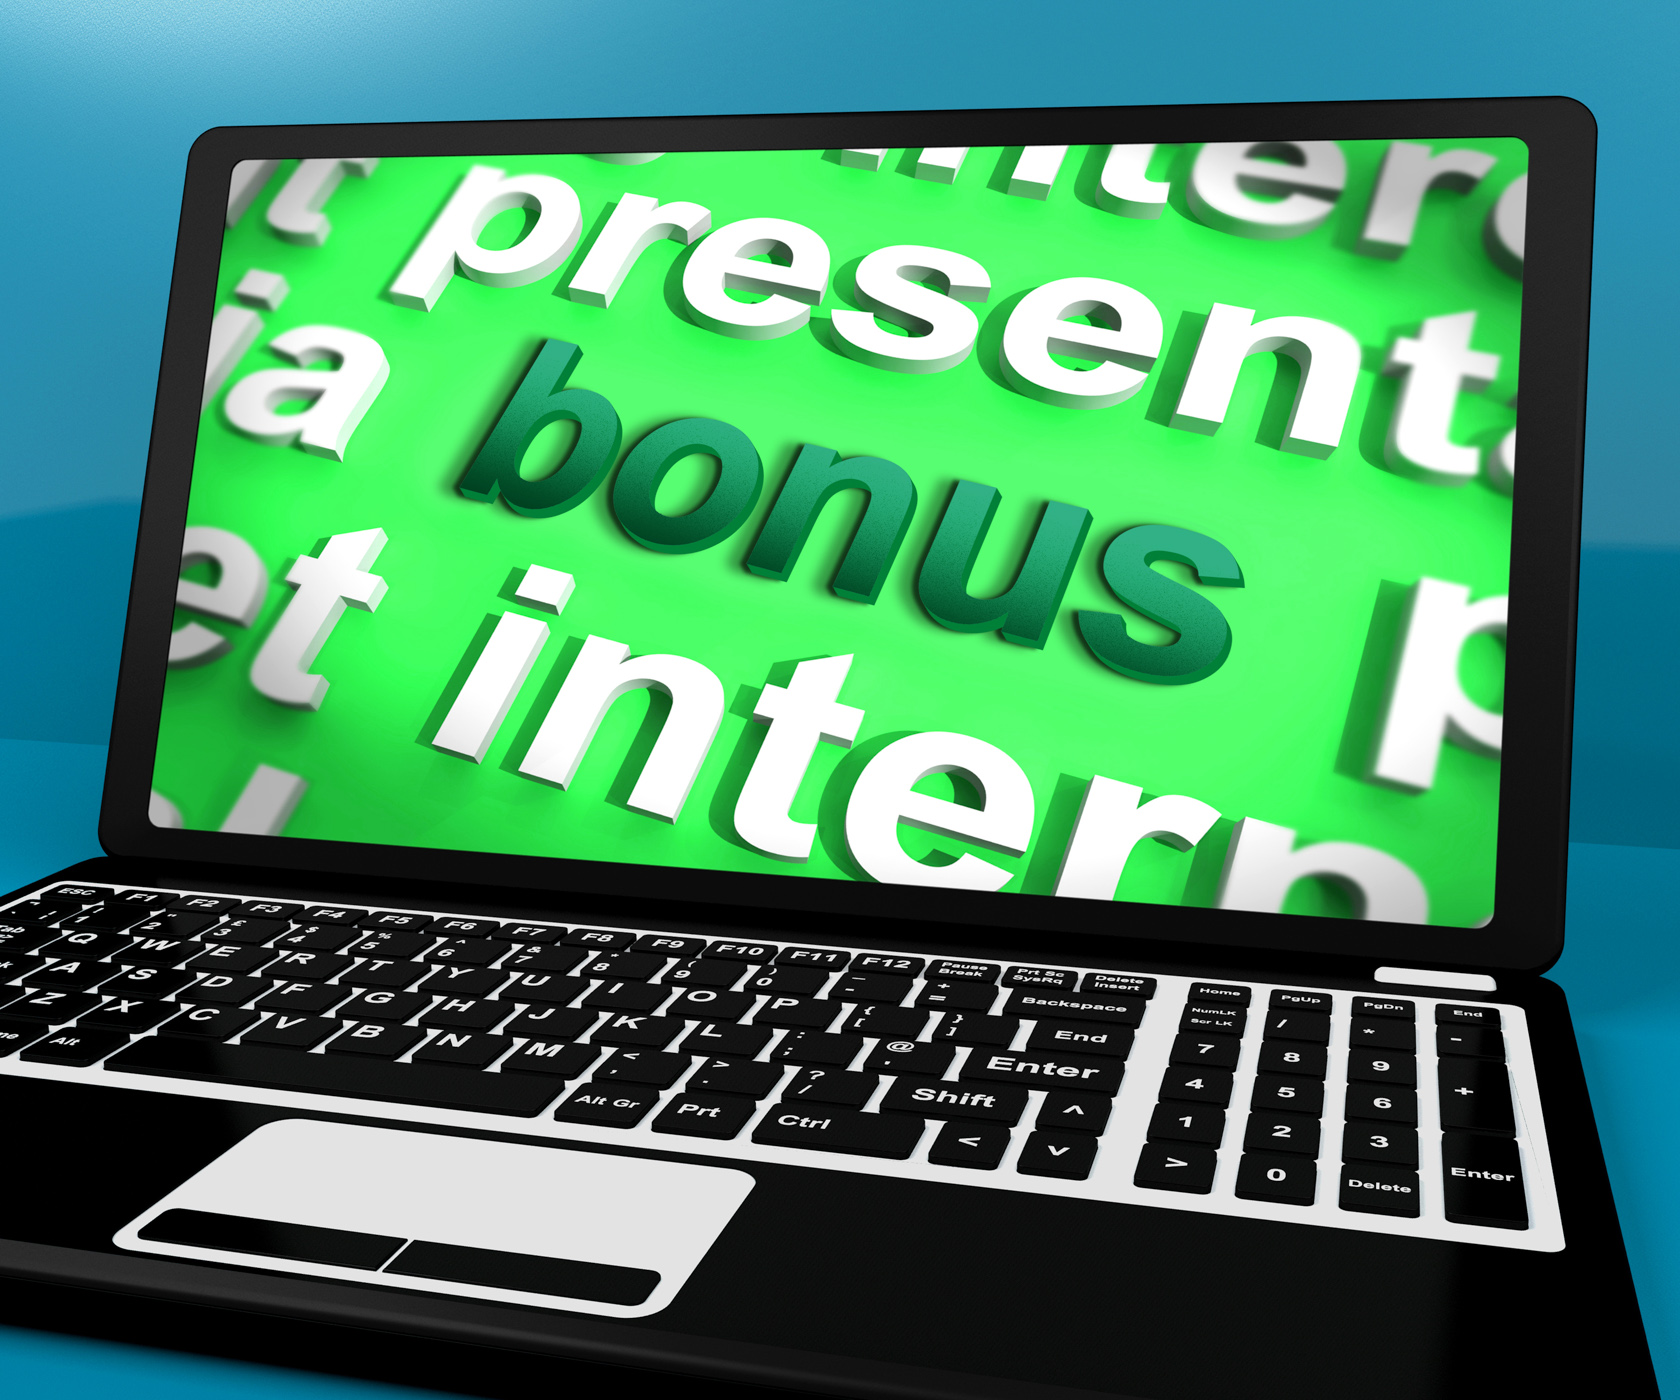 Bonus on laptop shows rewards benefits or perks online photo